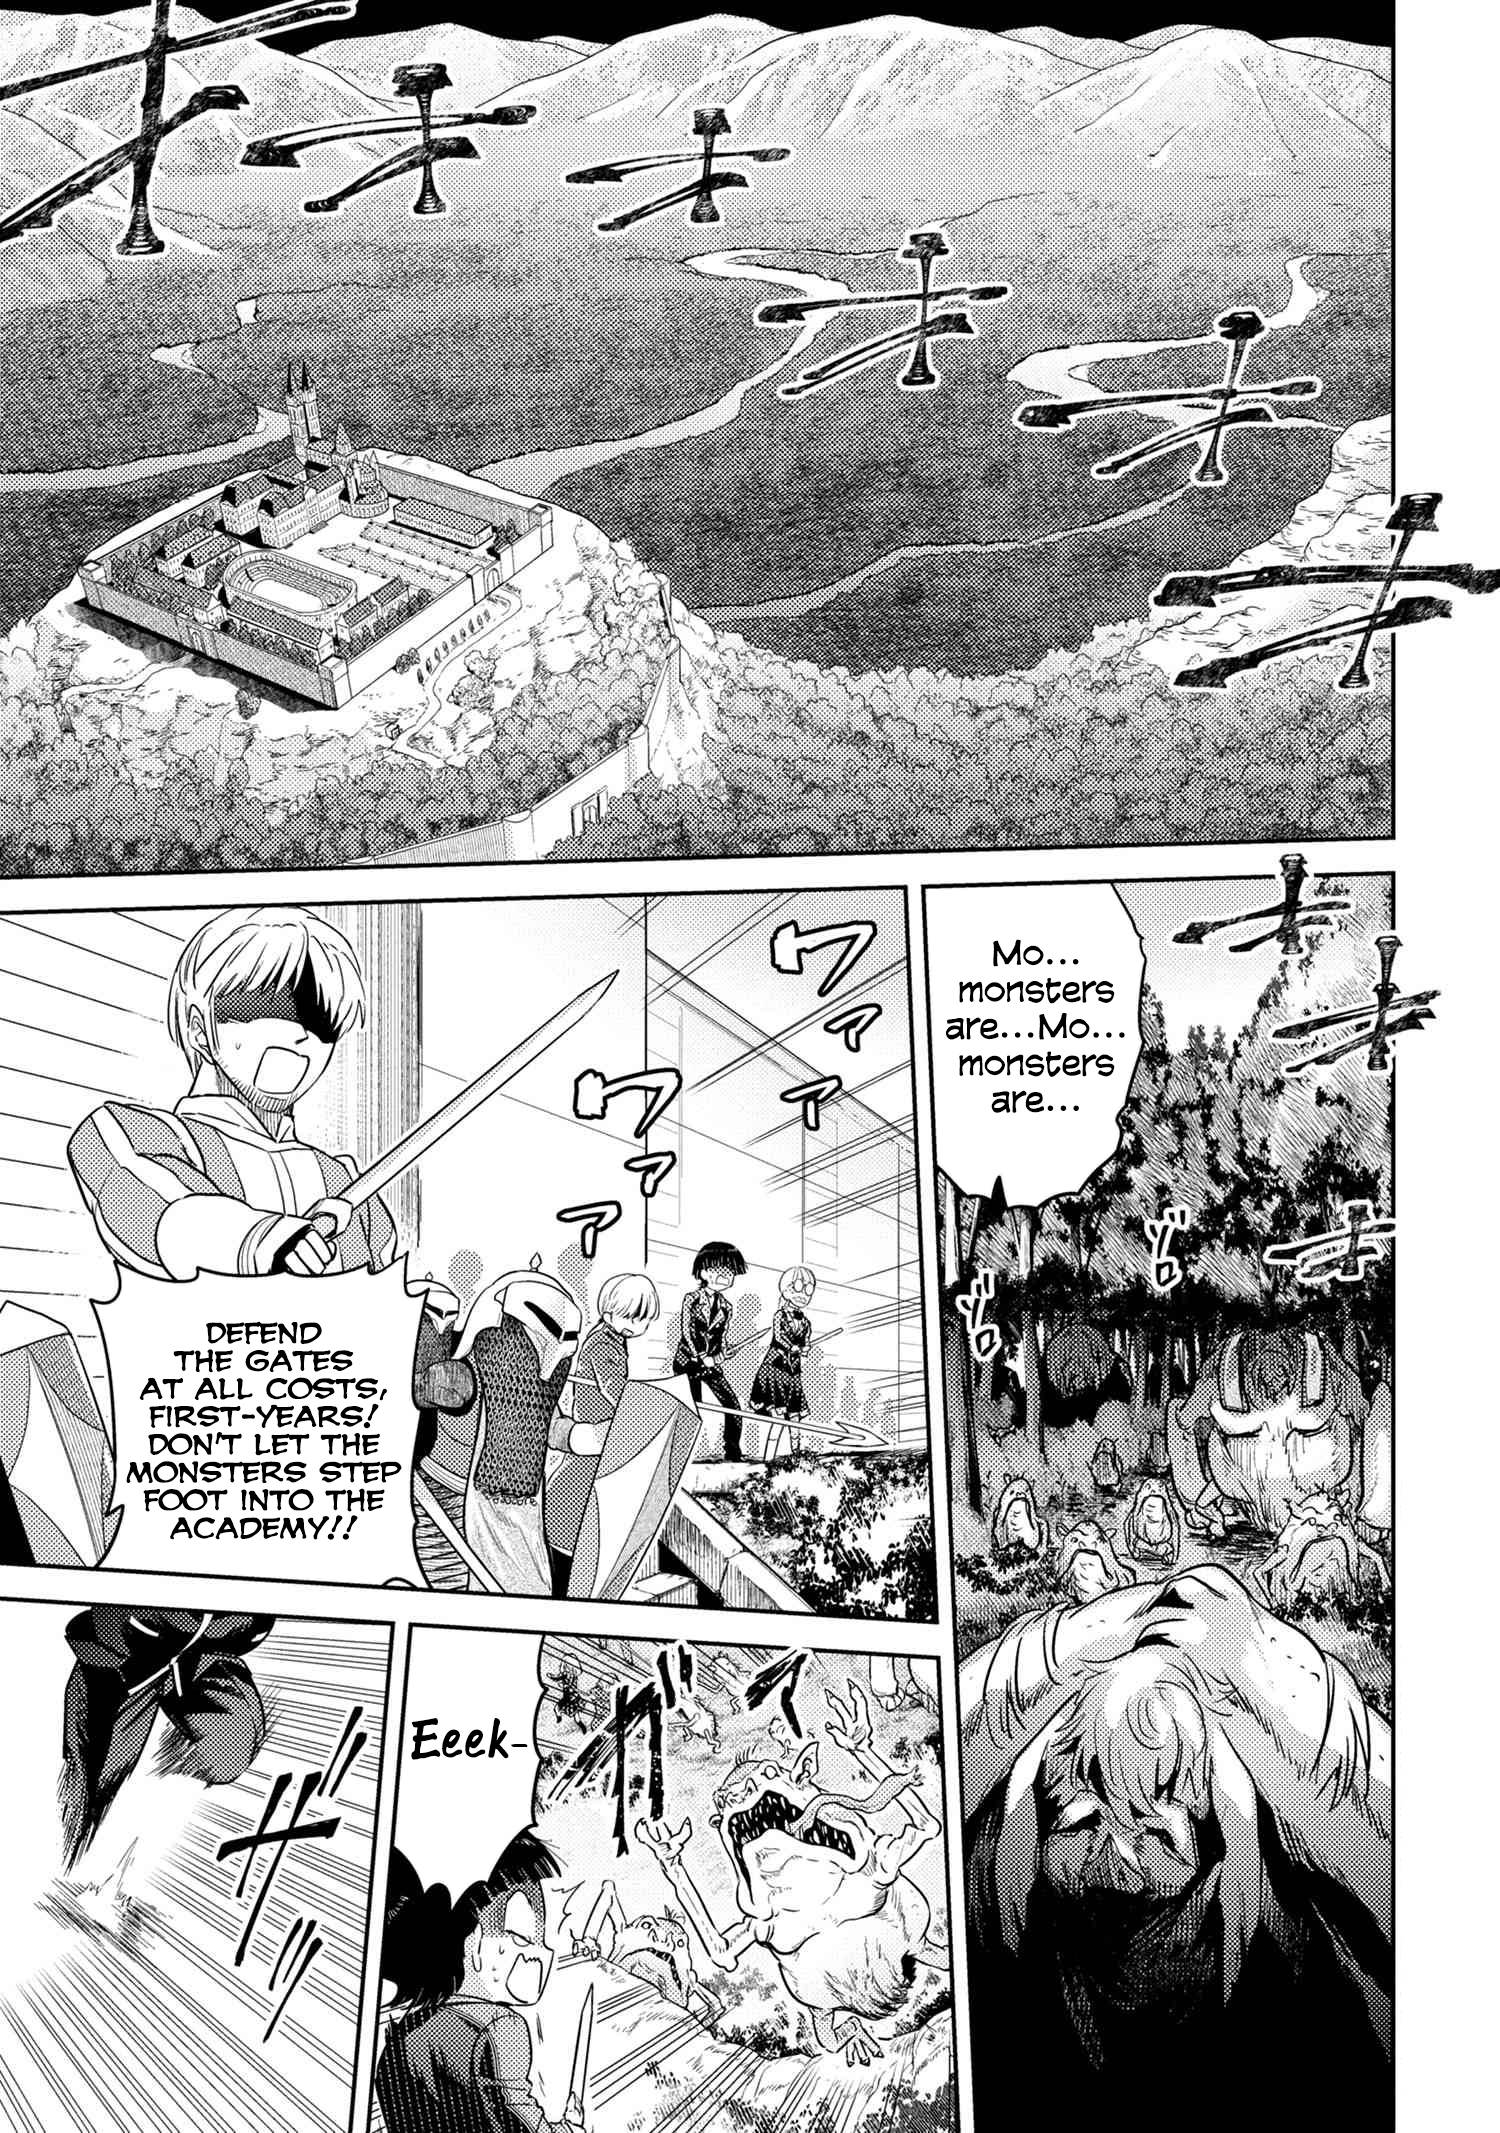 Read Sekai Saikyou no Assassin, Isekai Kizoku ni Tensei Suru Manga English  [New Chapters] Online Free - MangaClash